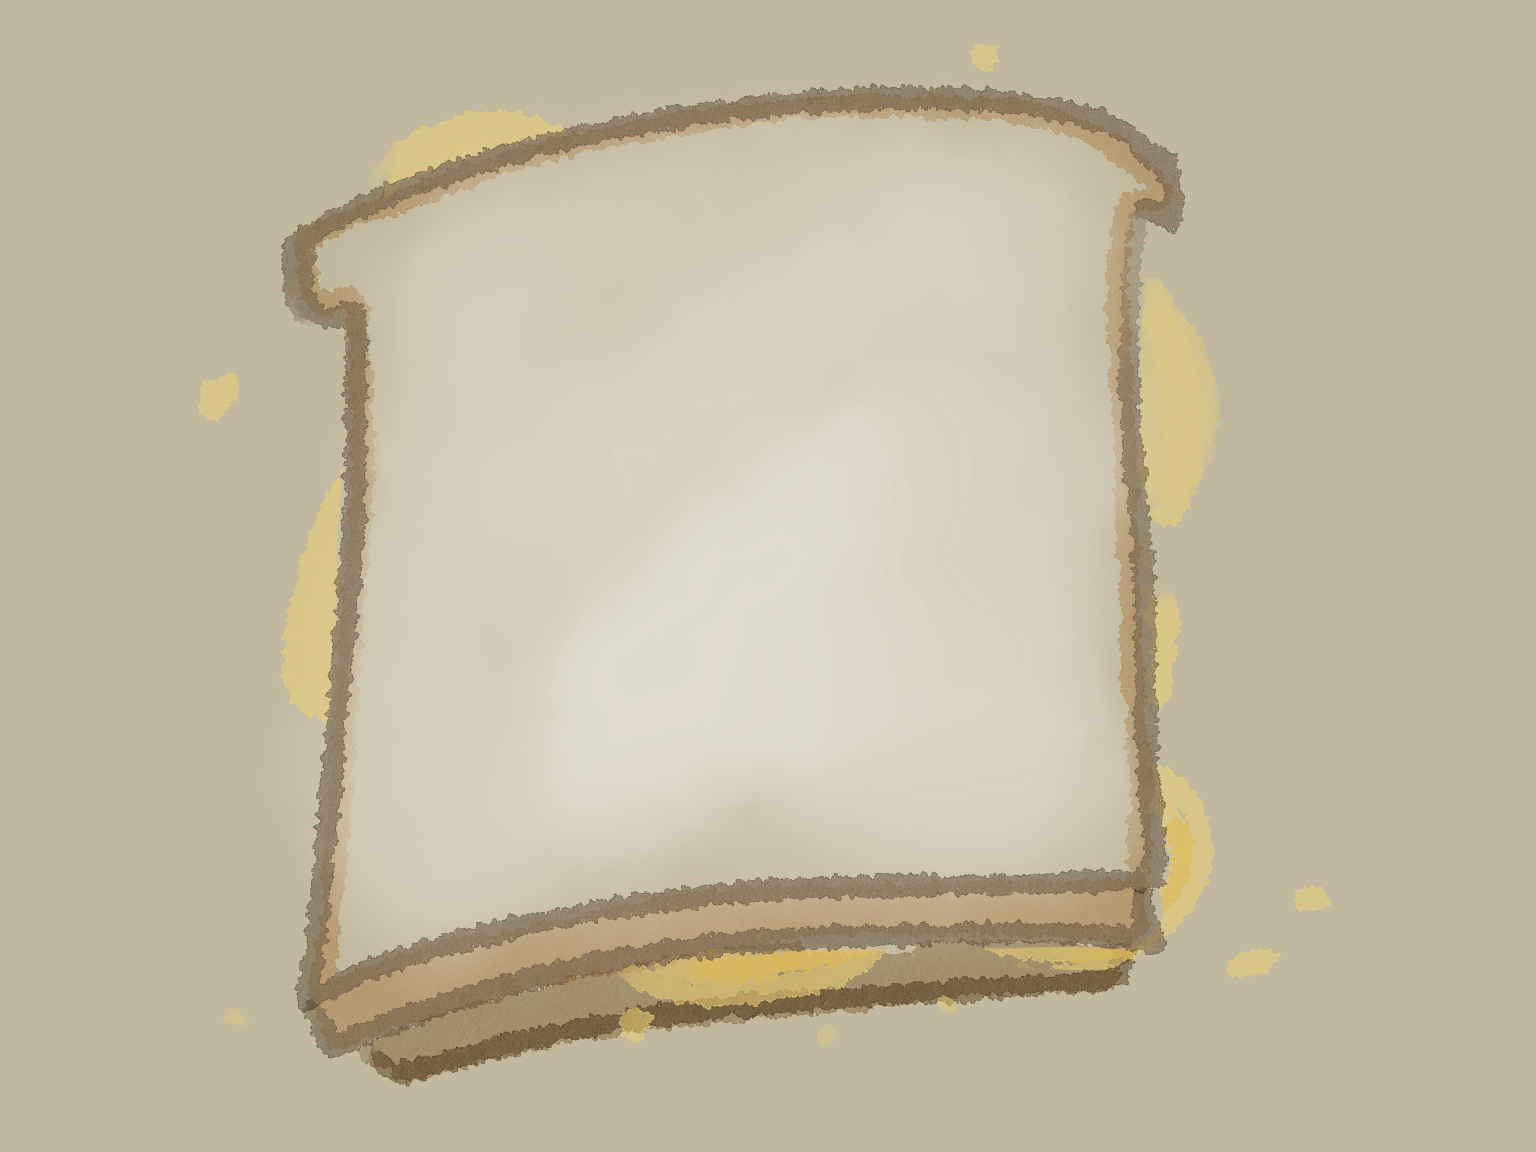 Digital painting of a white crisp sandwich